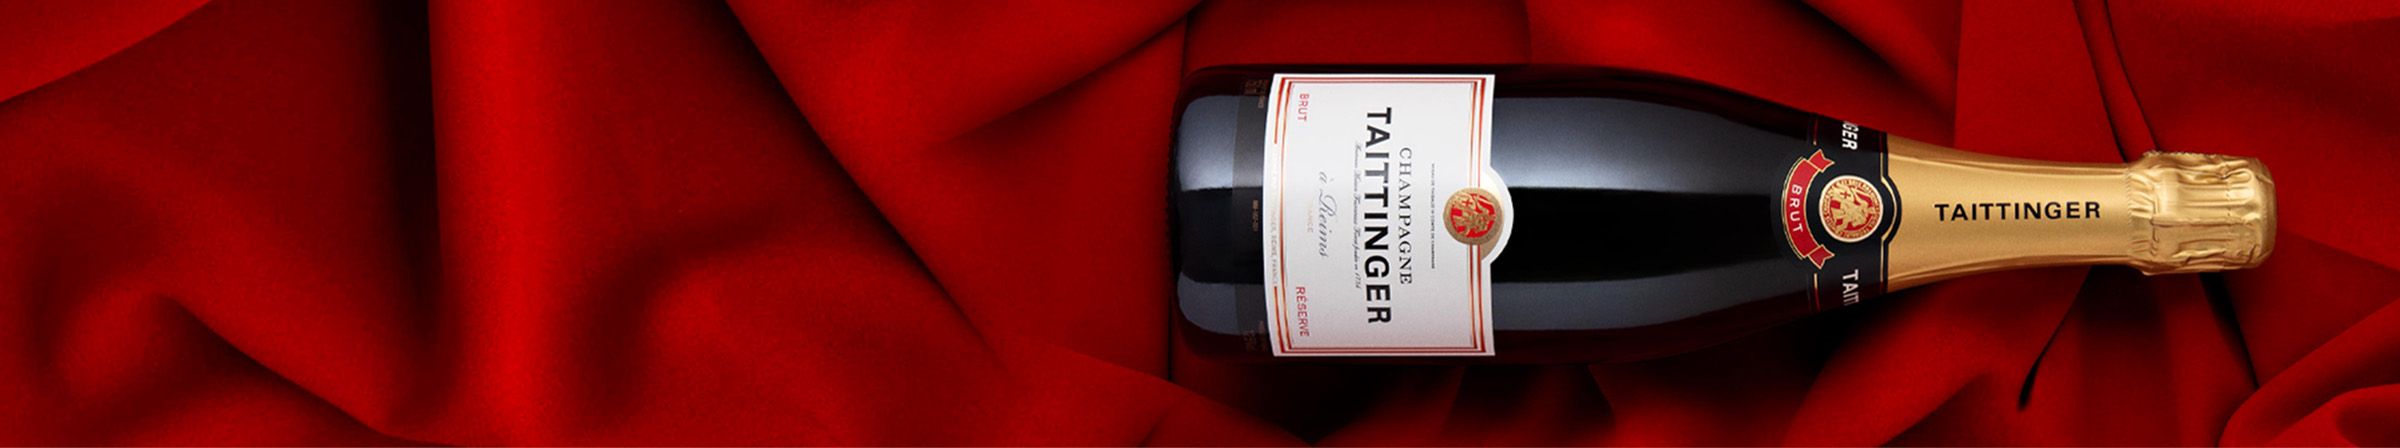 Bottle of Taittinger champagne on silk red background